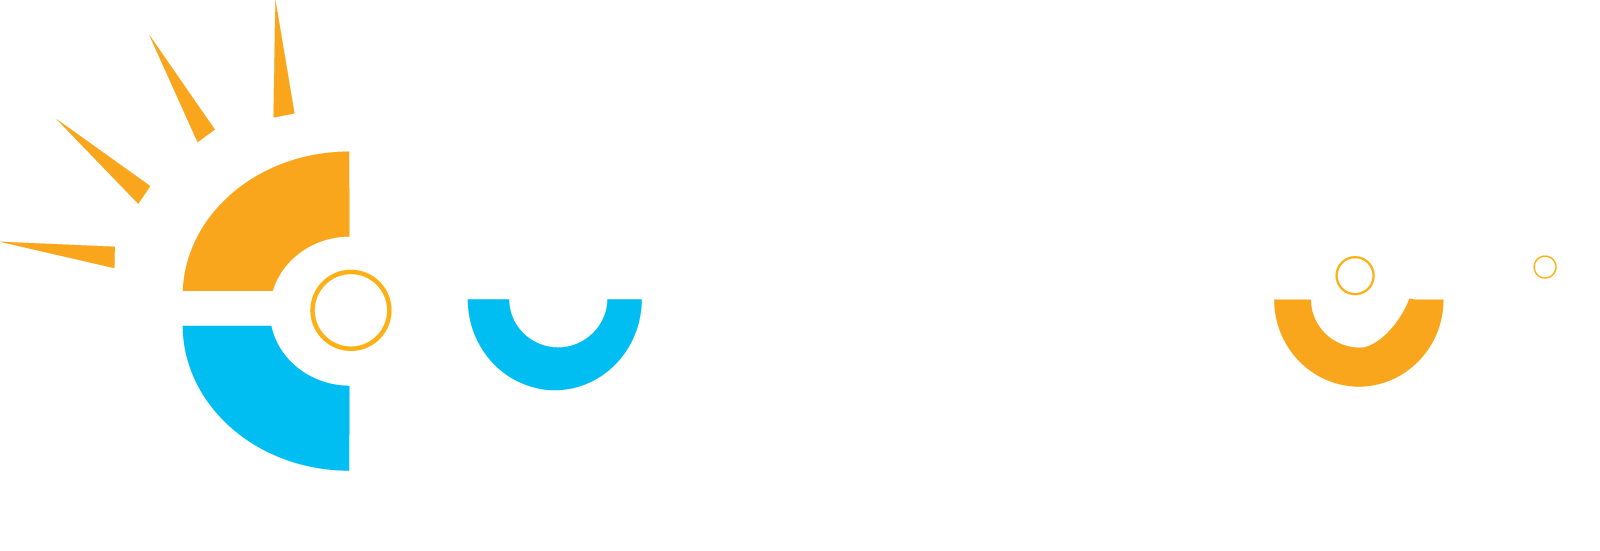 images/brand/Eye of Riyadh